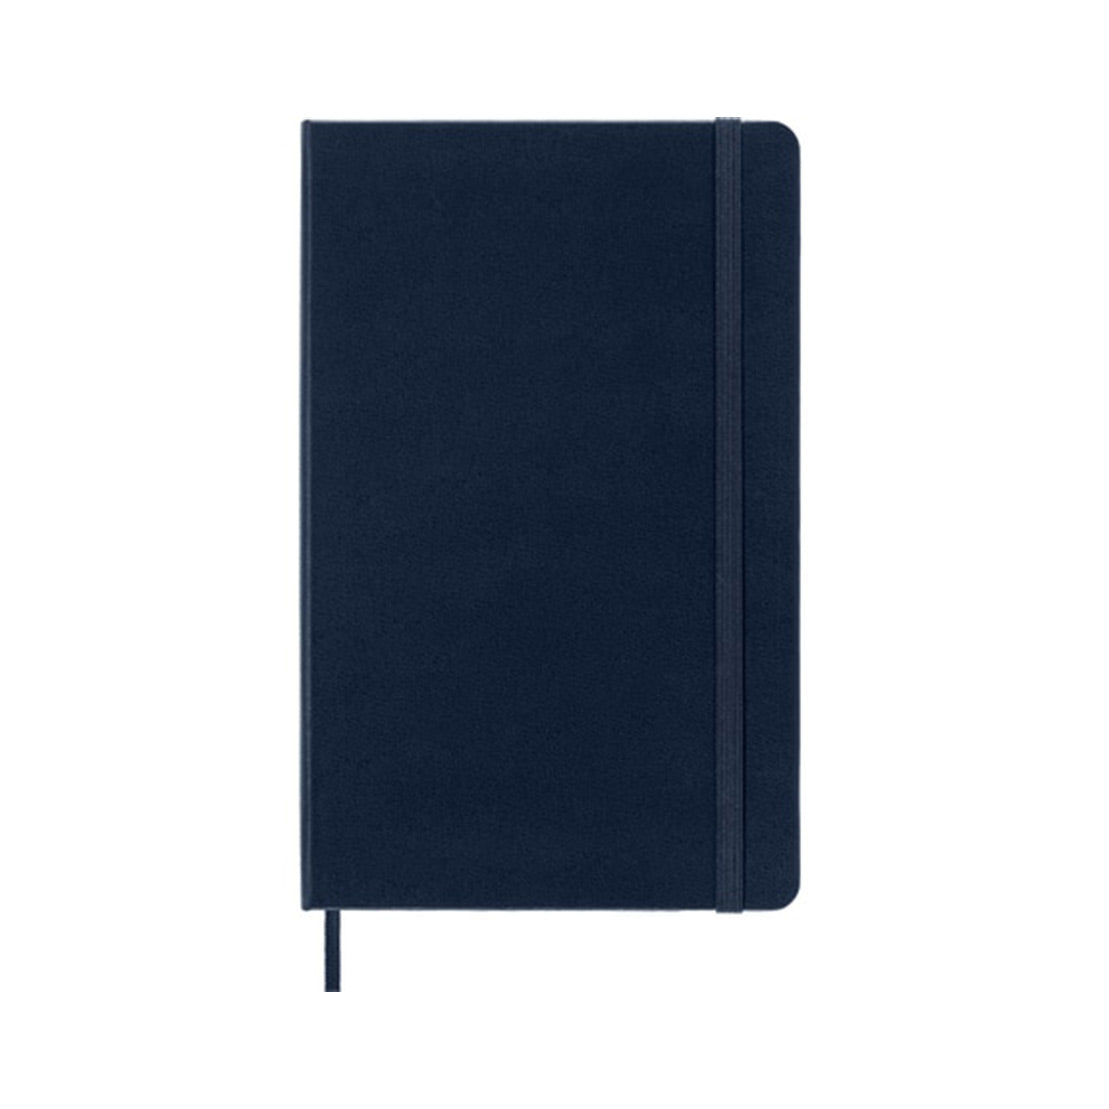 Moleskine Classic Large Ruled Hard Cover Notebook Navy Blue